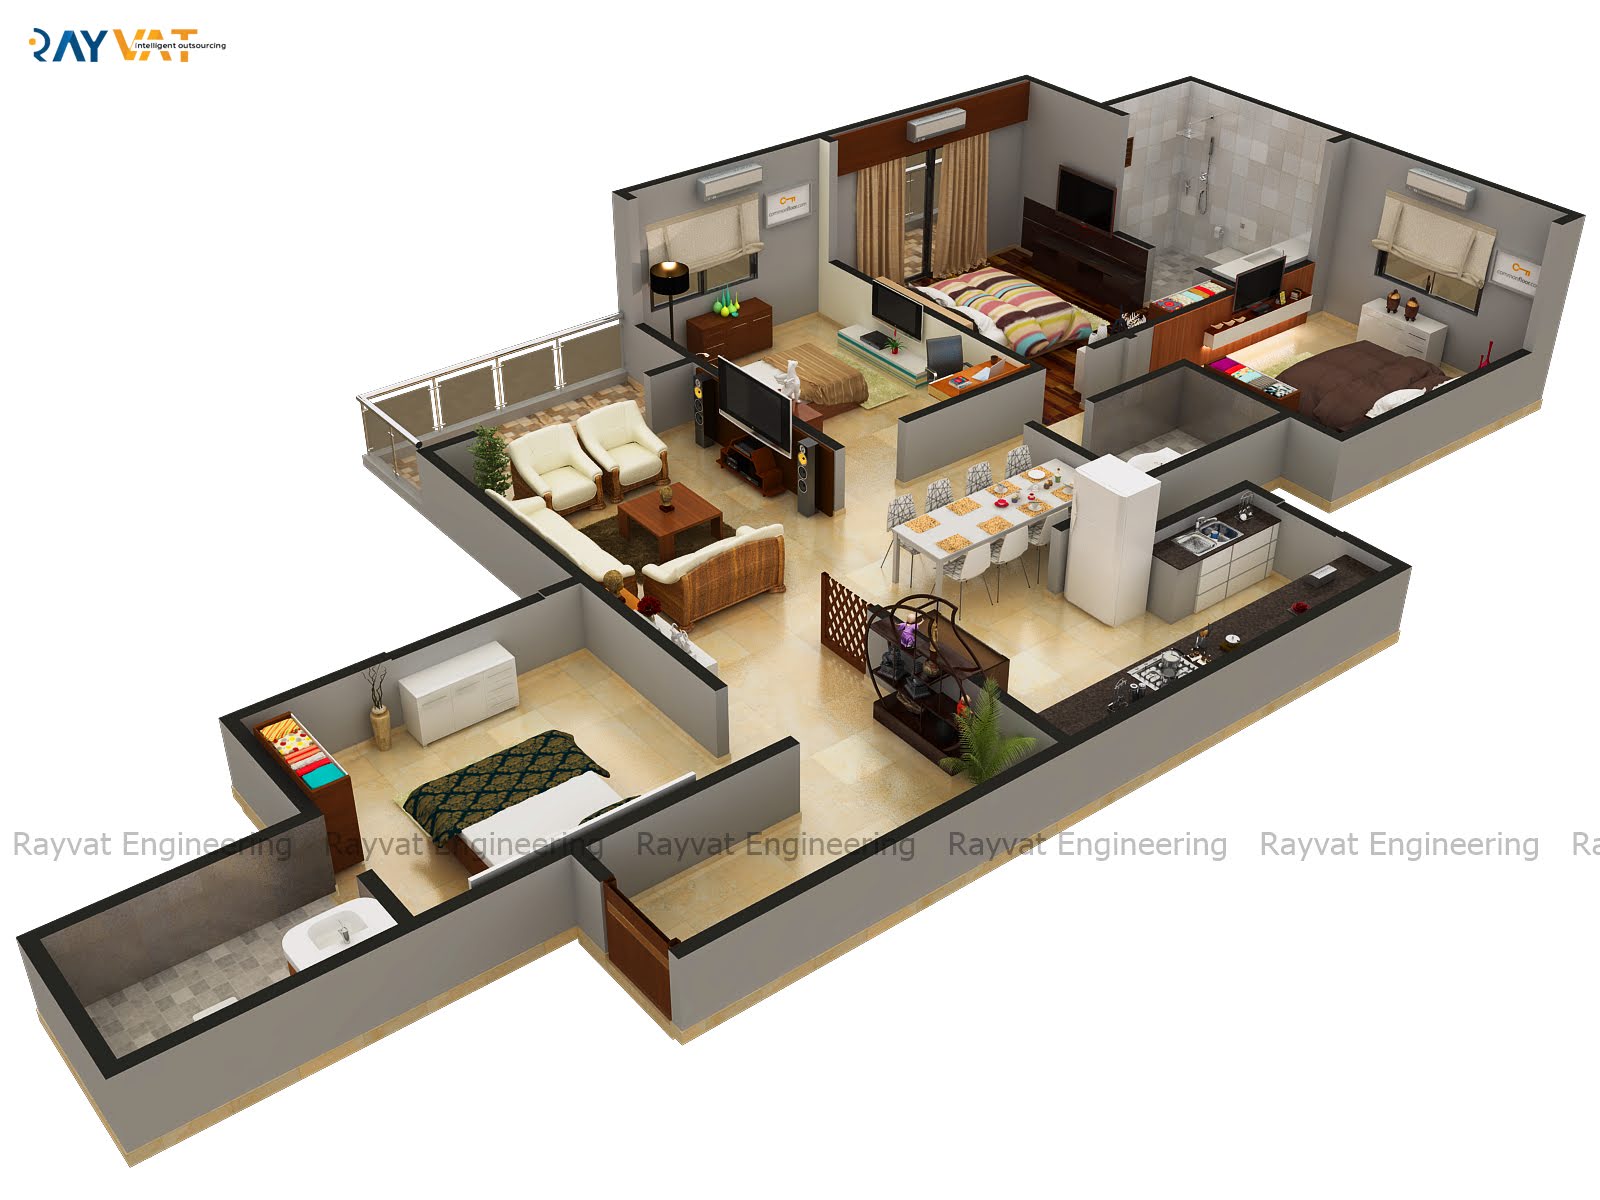 Luxurious-Flat-4-Bedrooms-Dubai.jpg  by Rayvatengineering